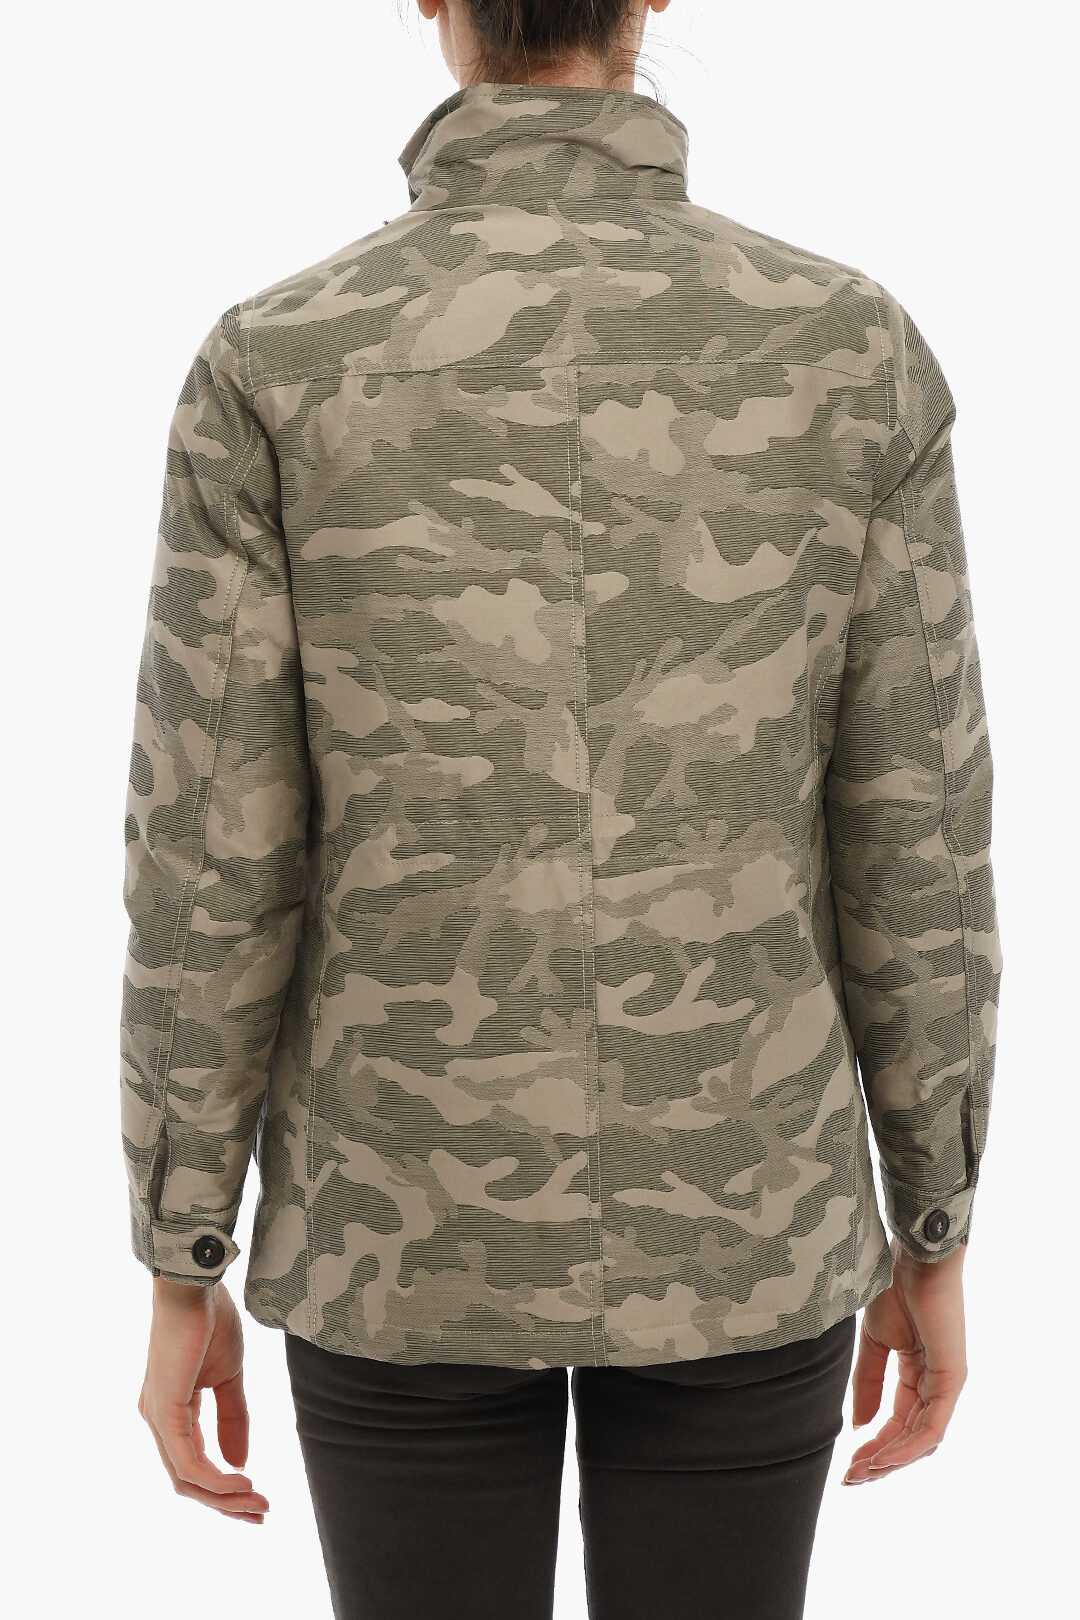 https://data.glamood.com/imgprodotto/camouflage-keene-field-down-jacket-with-double-brest-pockets_1386712_zoom.jpg